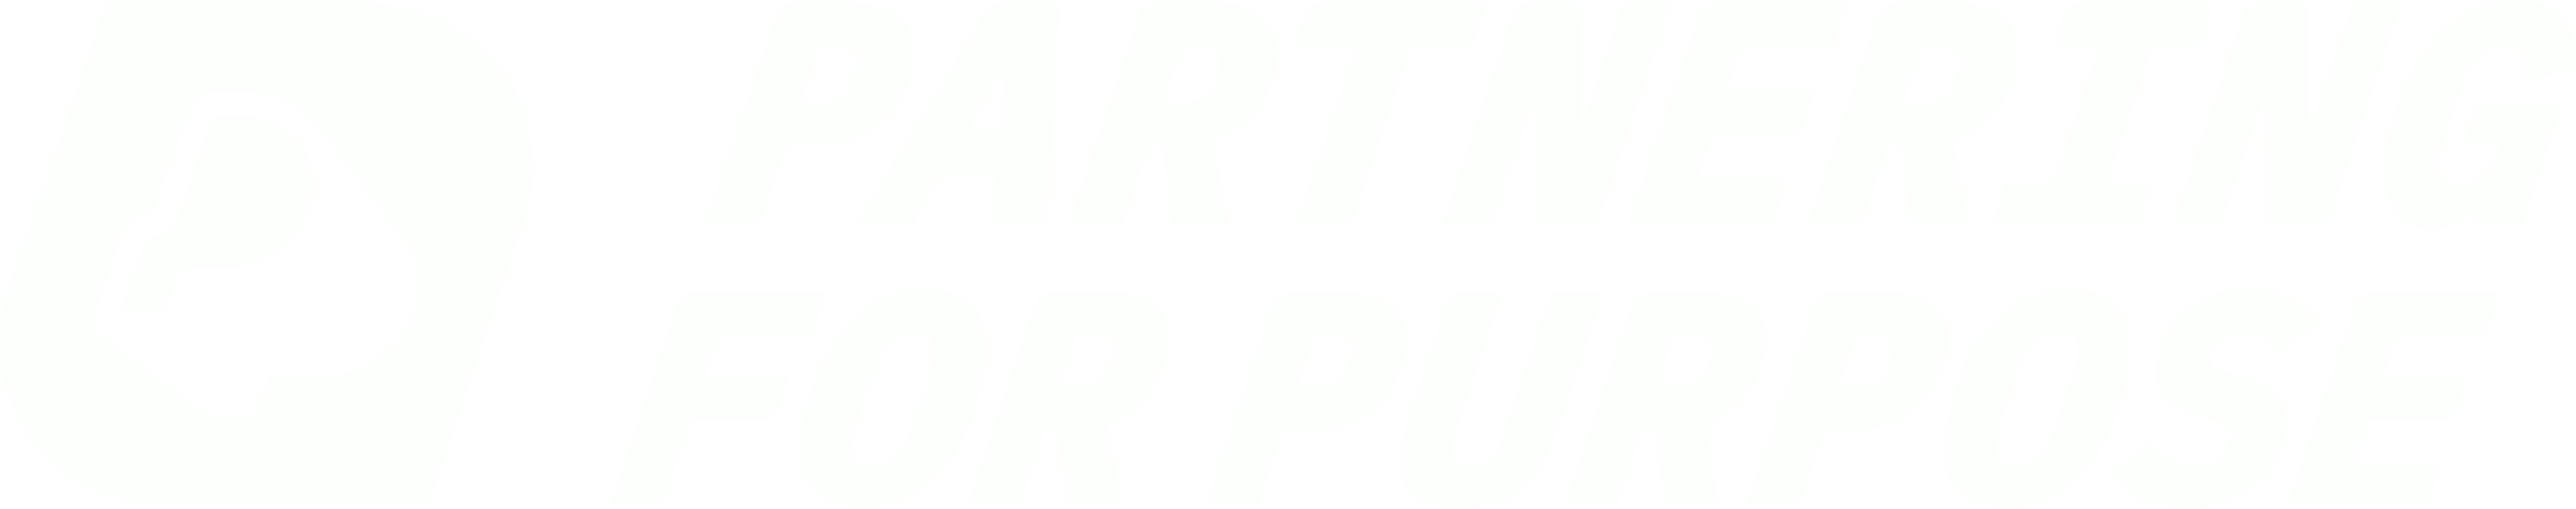 Partnering For Purpose Logo